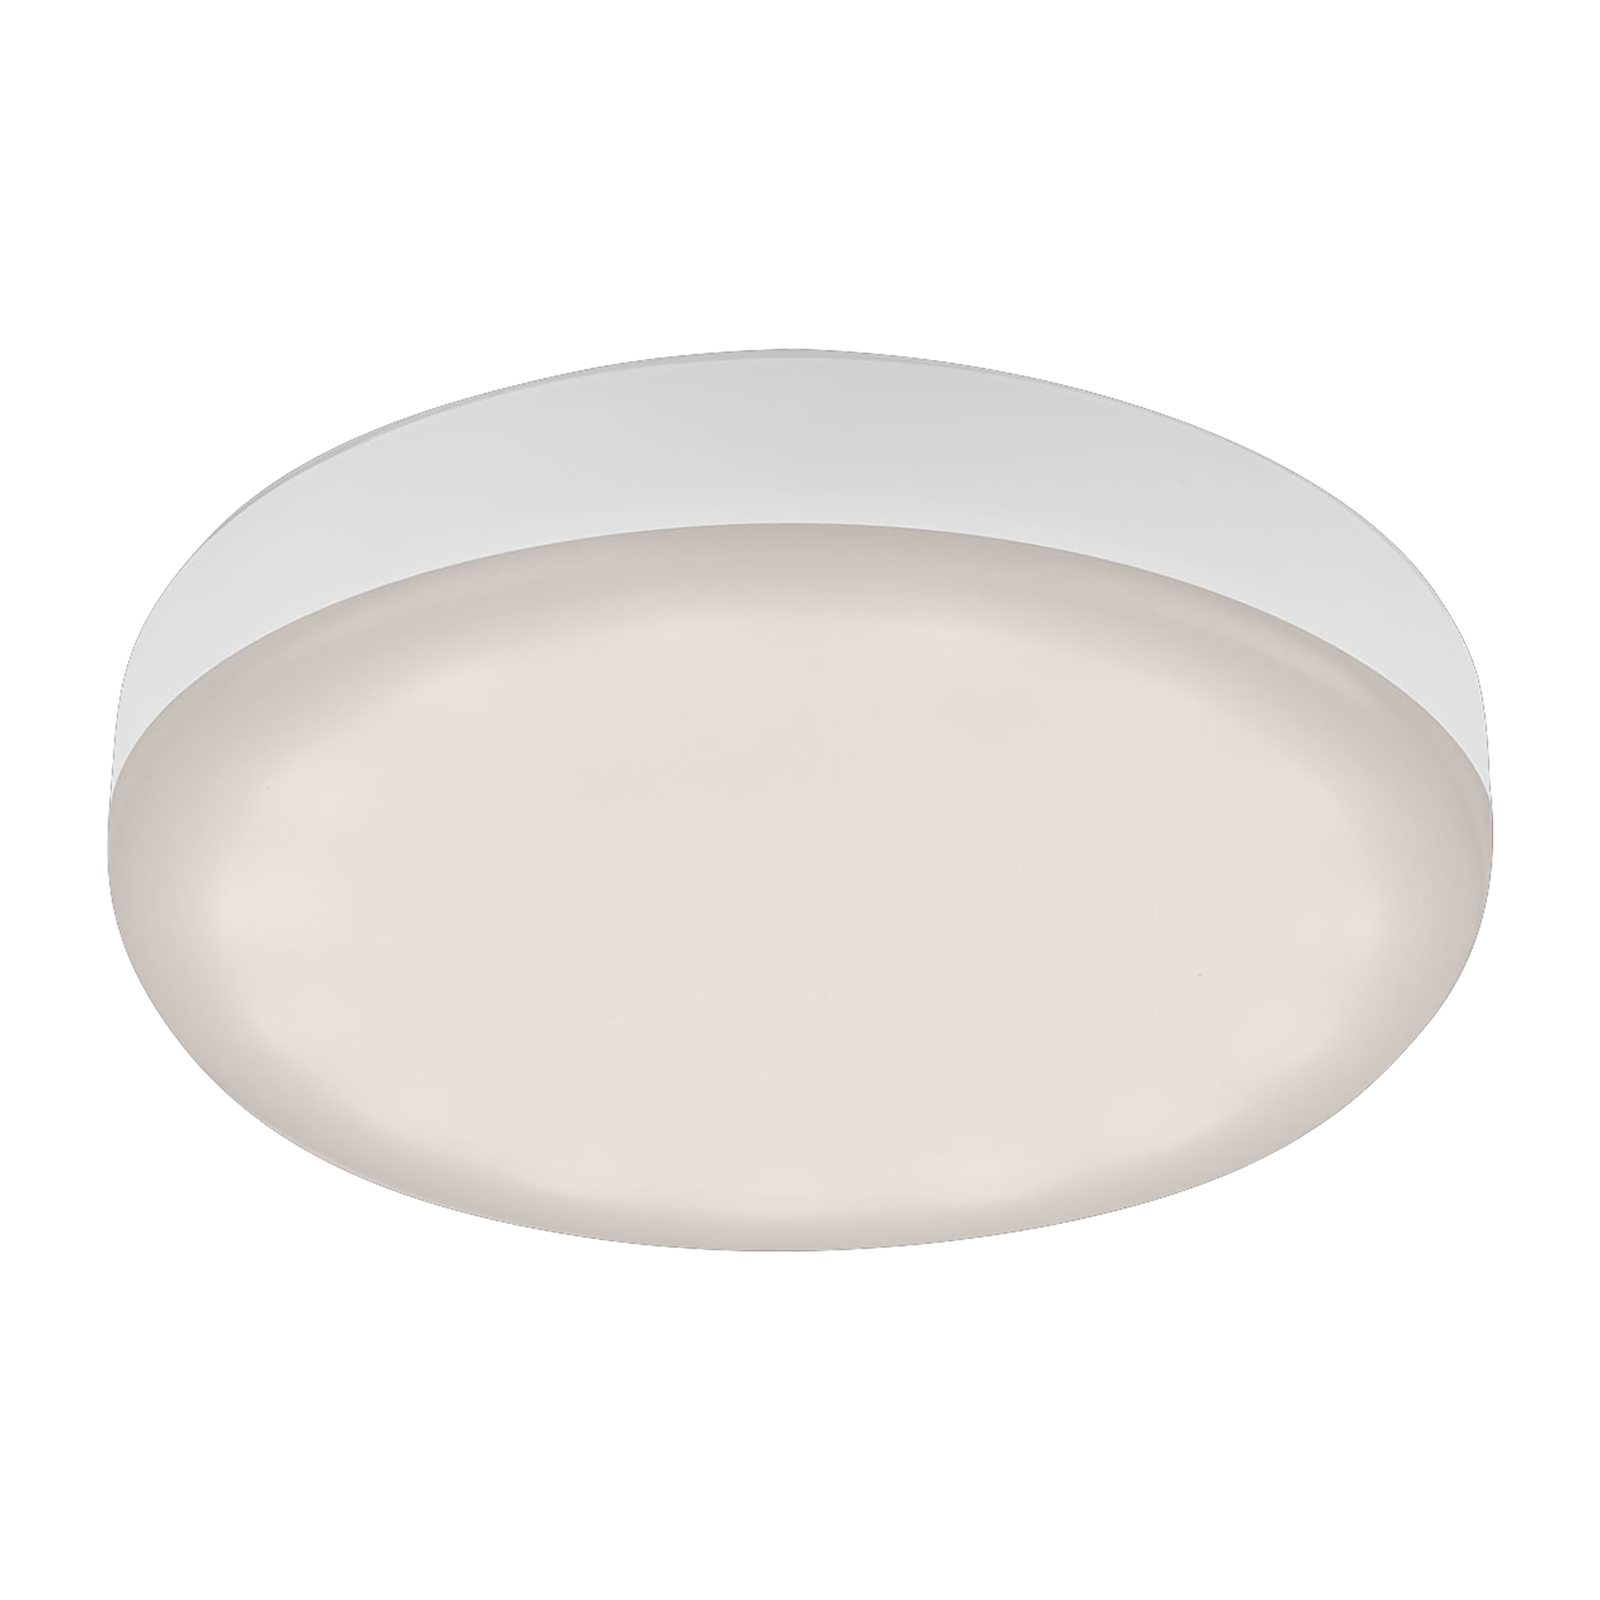 Spot wpuszczany LED Plat, biały, Ø 7,5 cm, 4 000 K